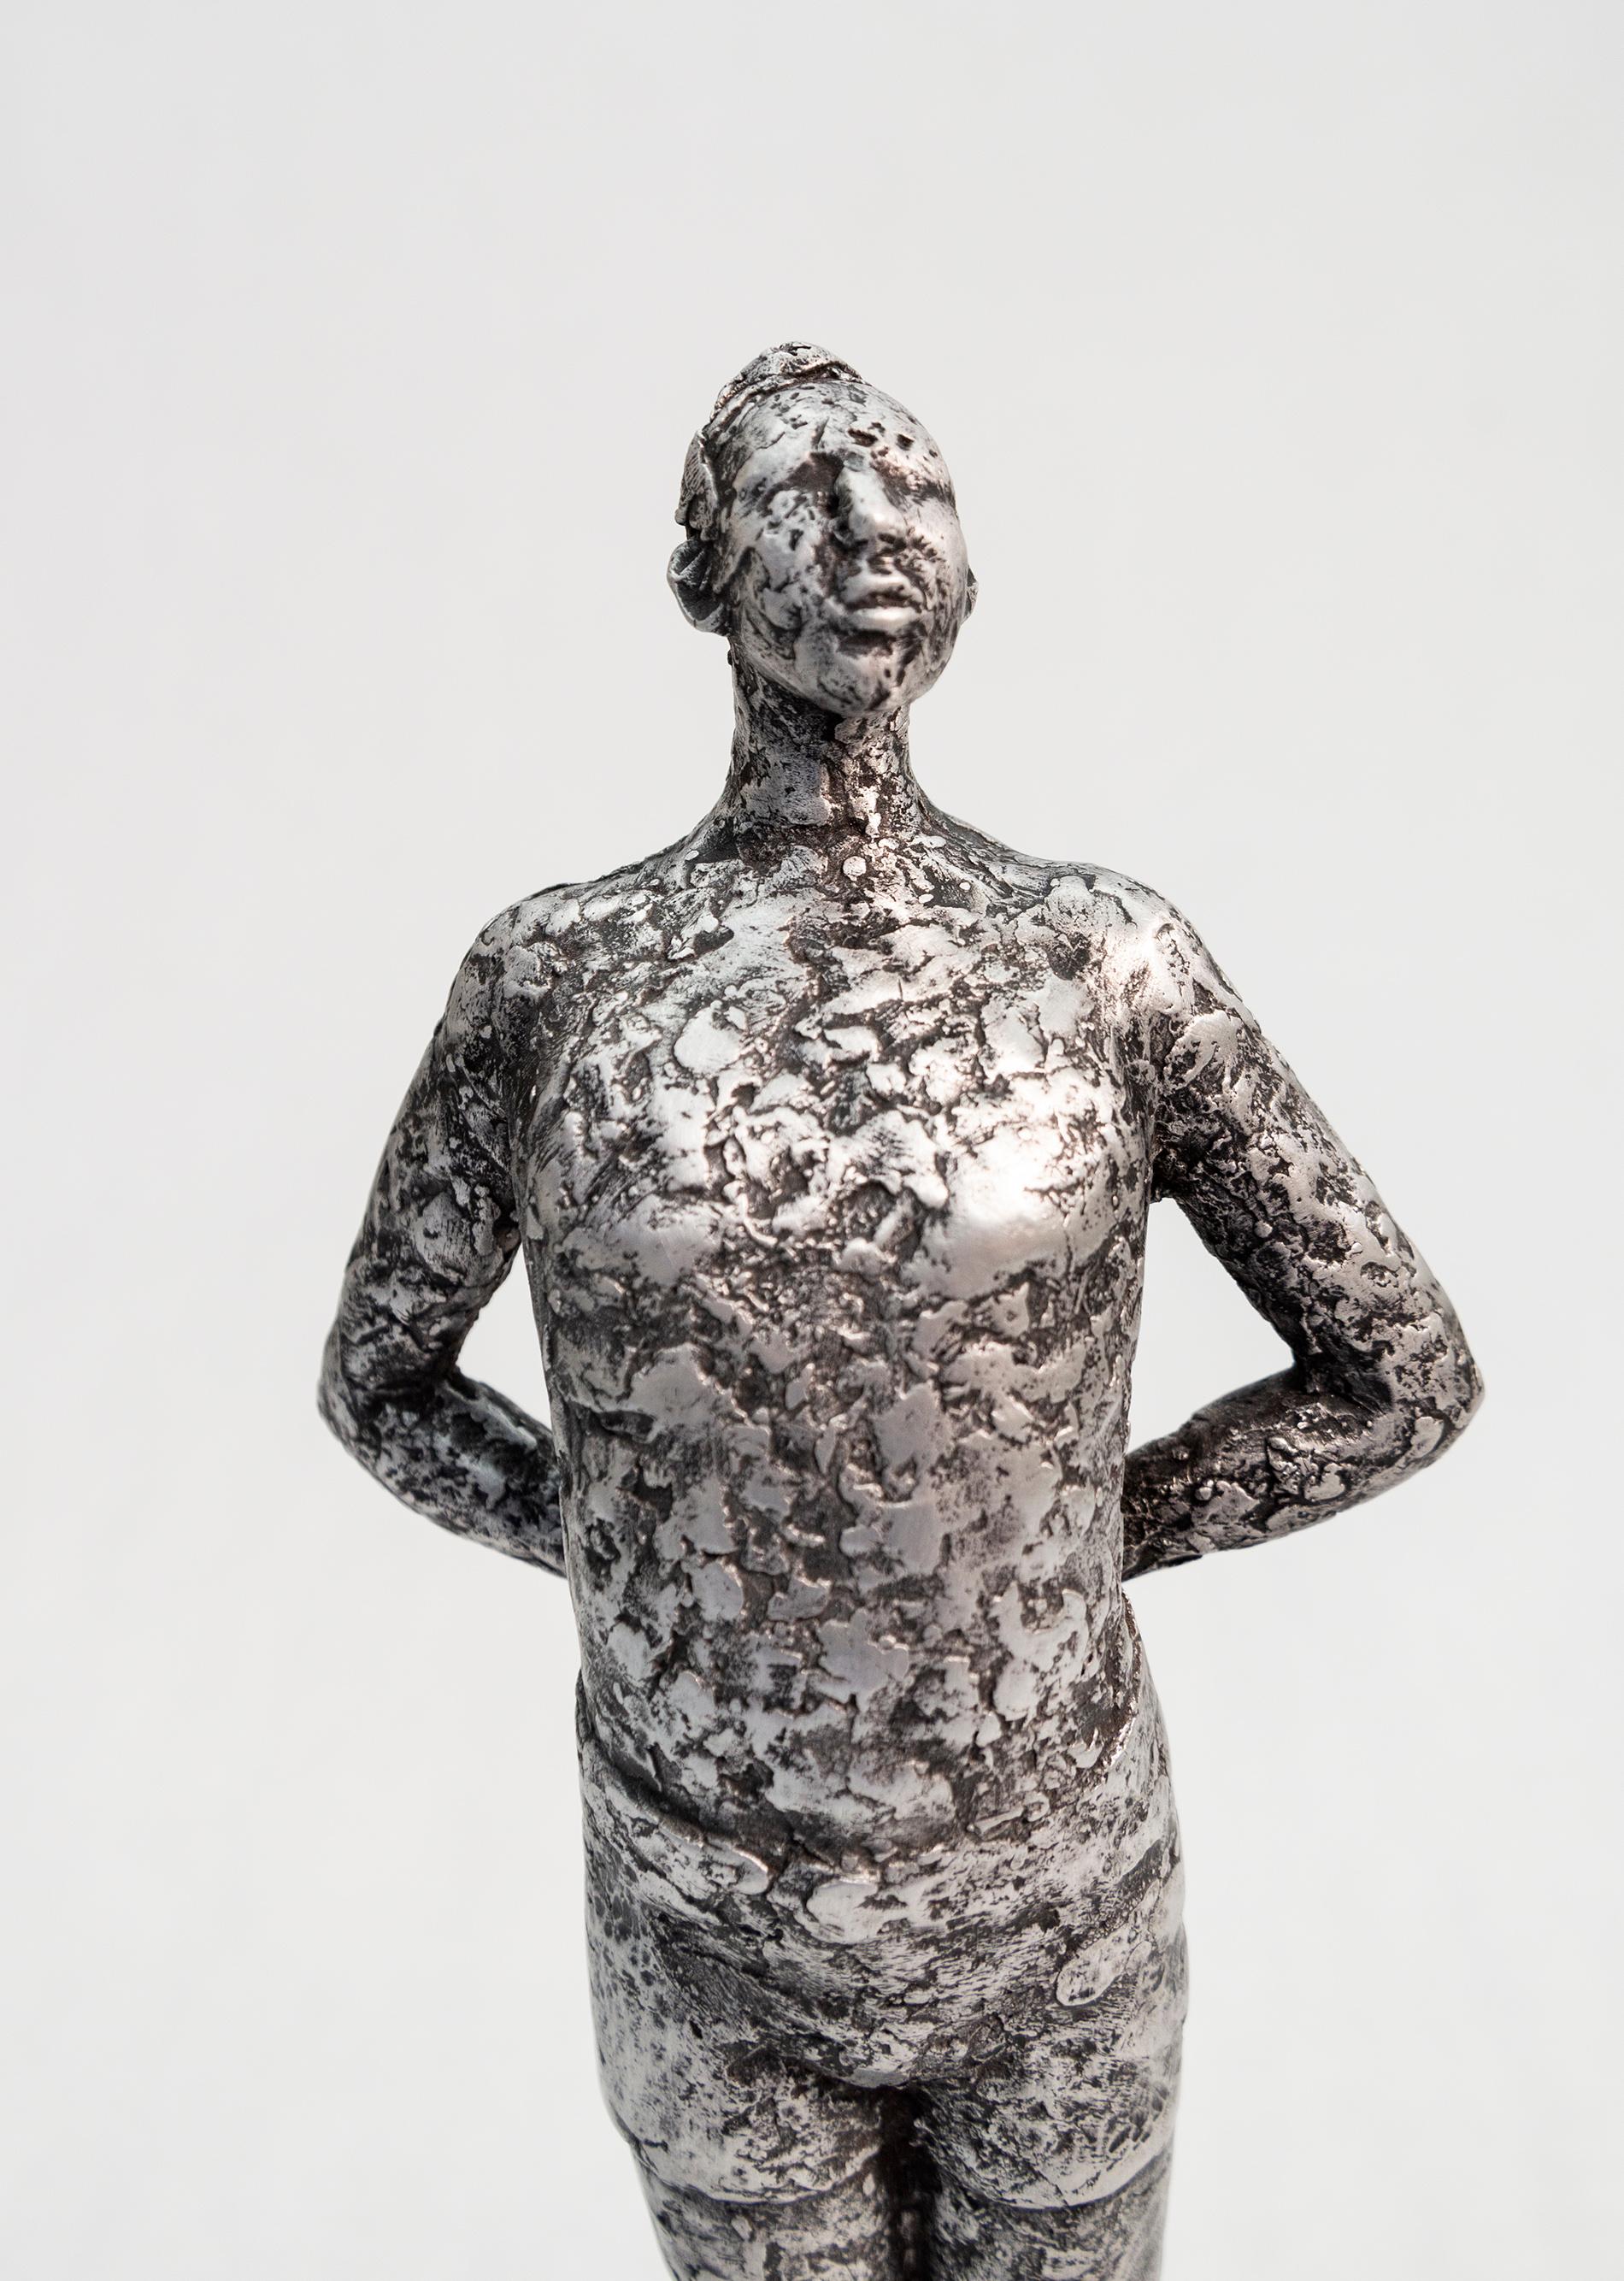 The Big Shy One - expressive, textured, male figurative, cast aluminum sculpture For Sale 1